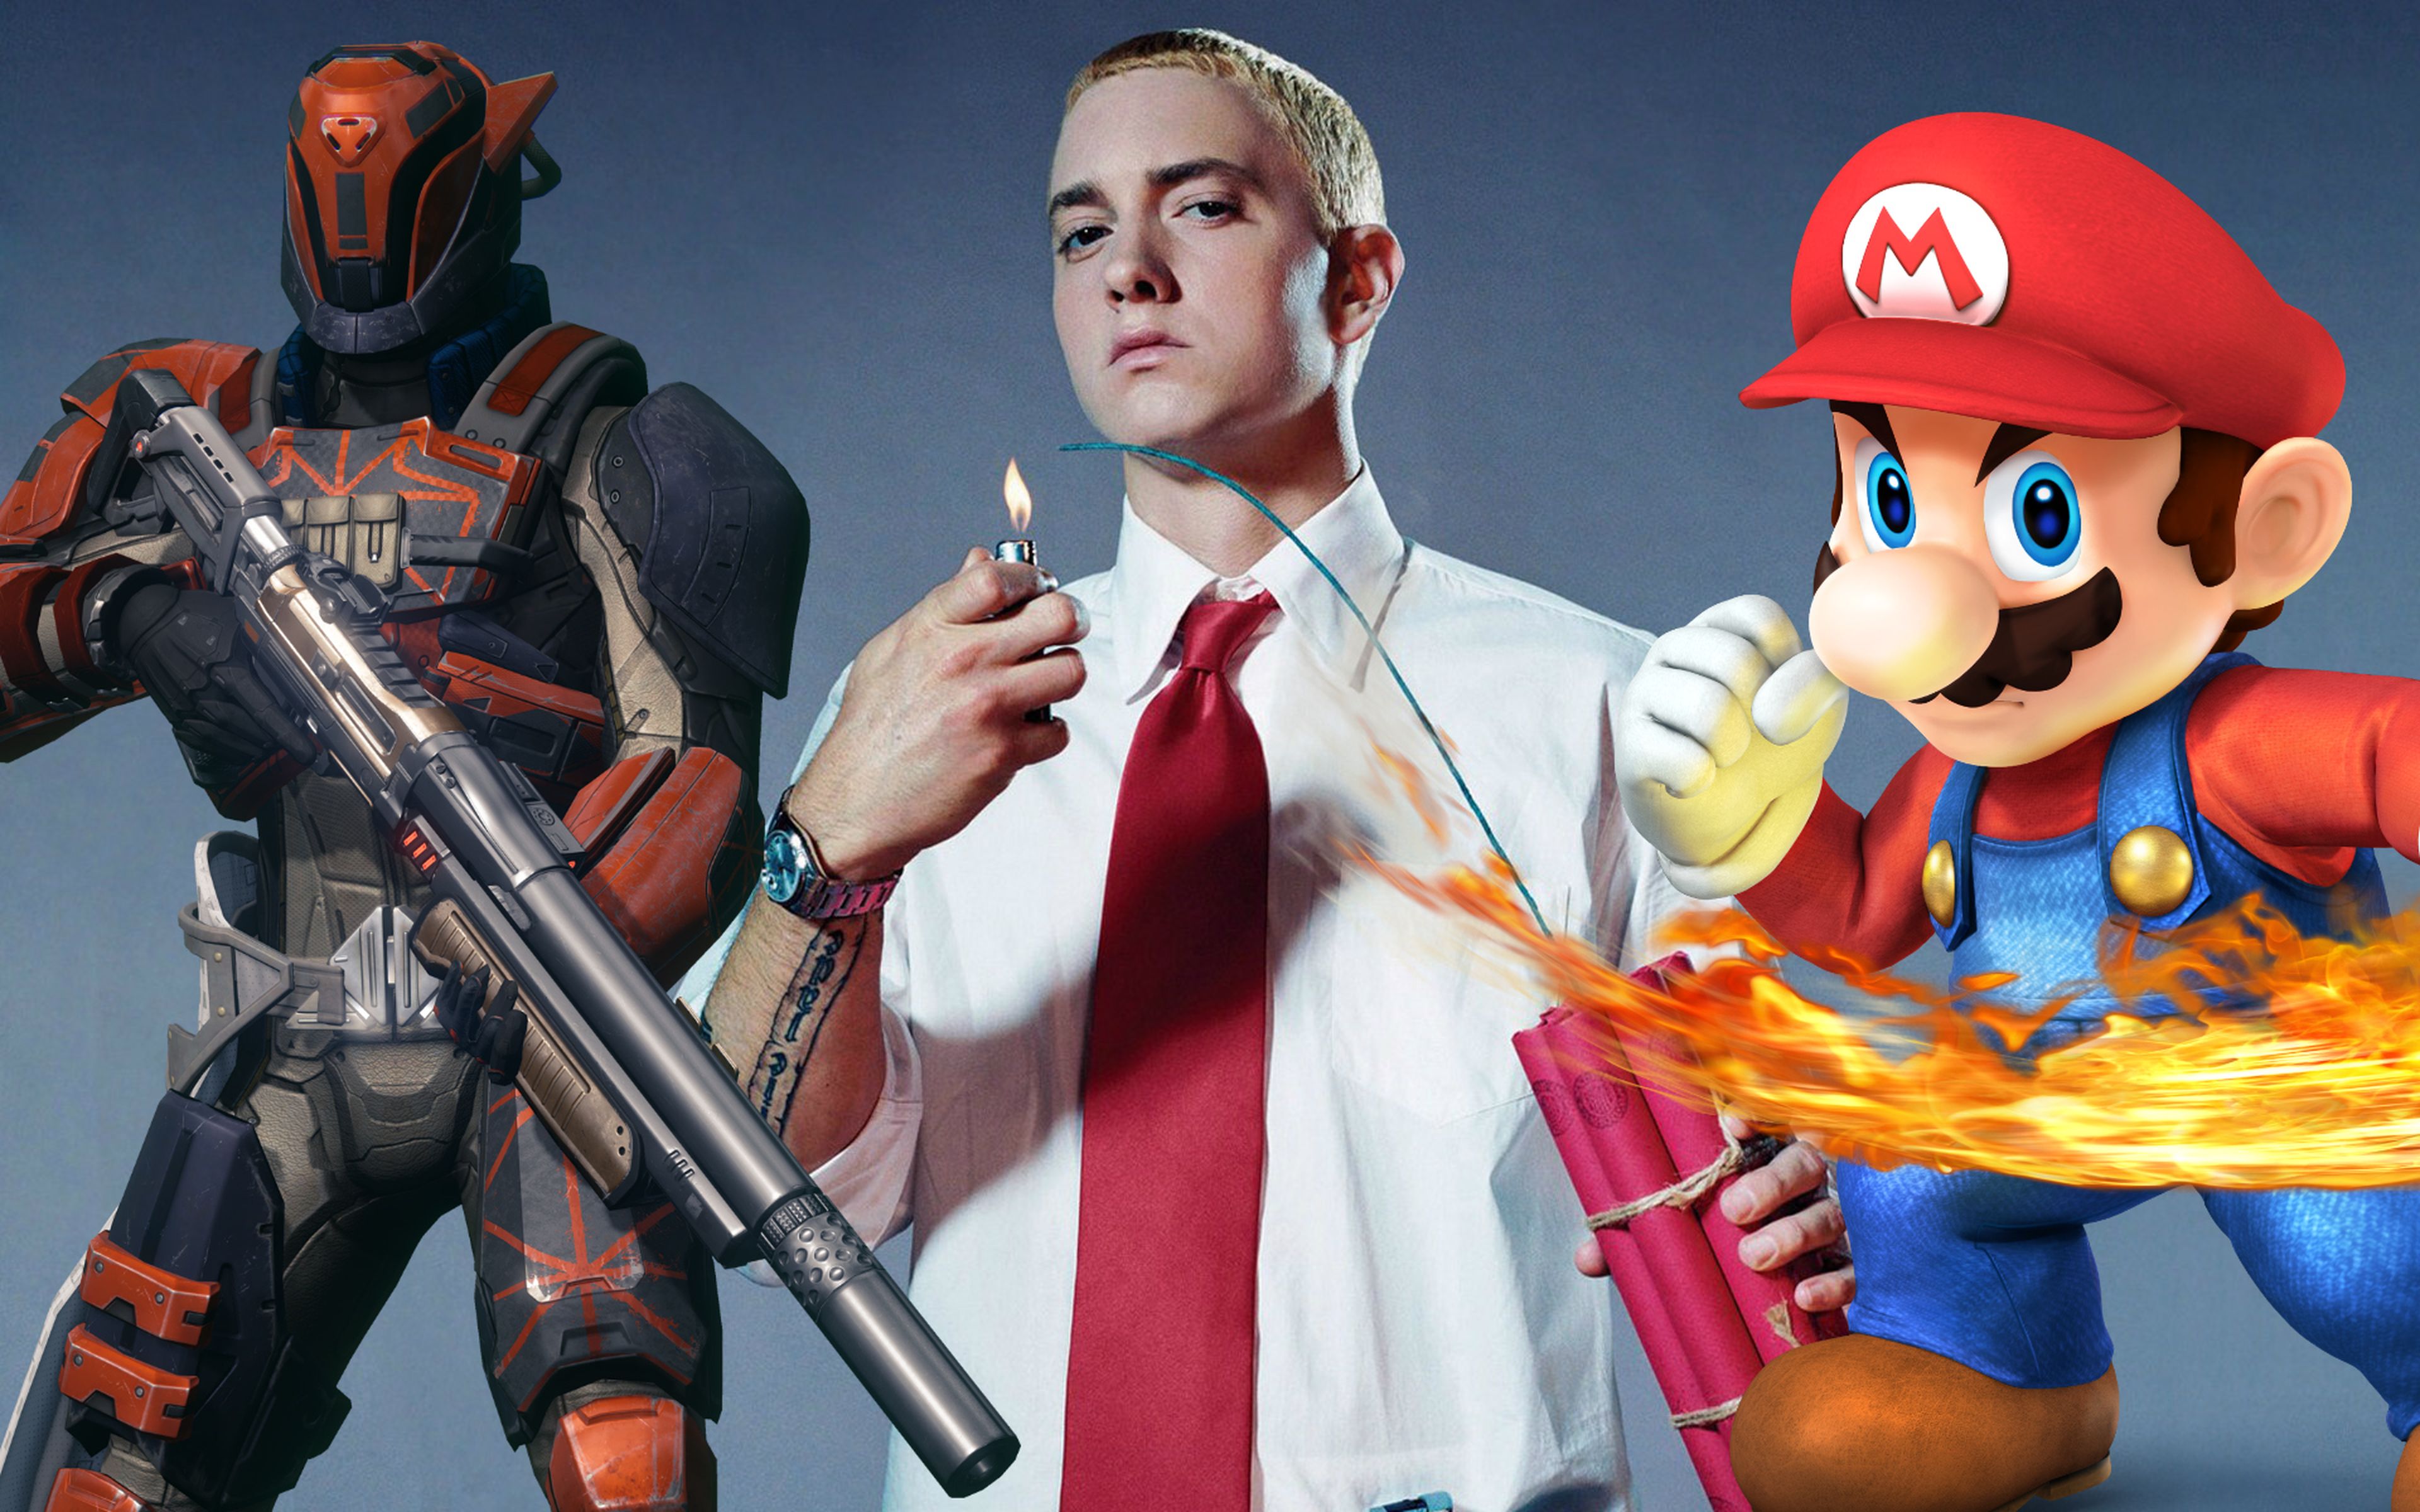 Eminem se aburre de Destiny y compra Wii U para jugar a Super Smash Bros.